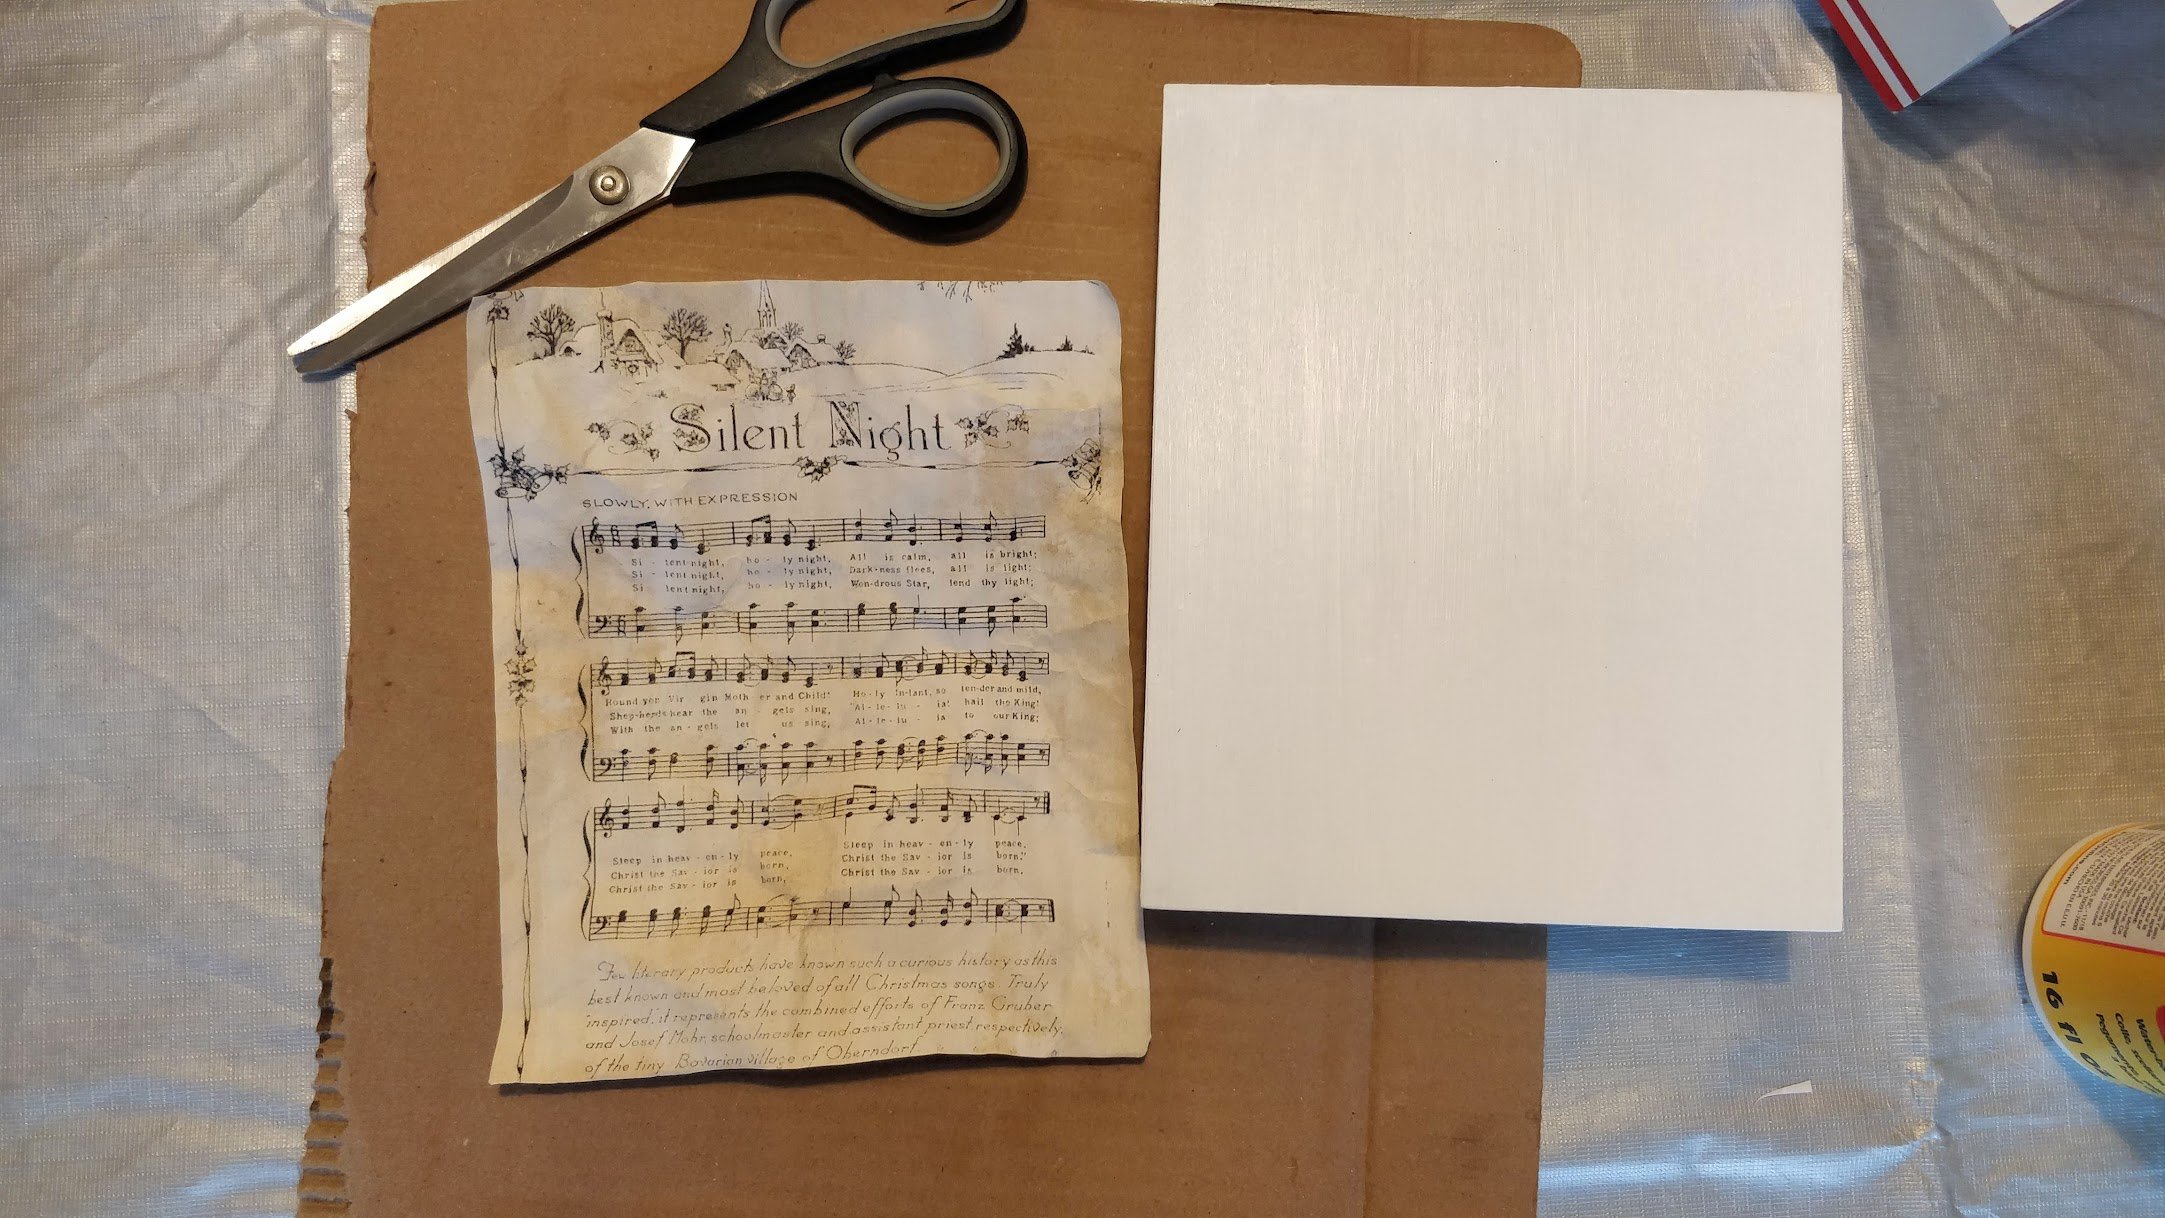 how to modify paper lyrics on canvas